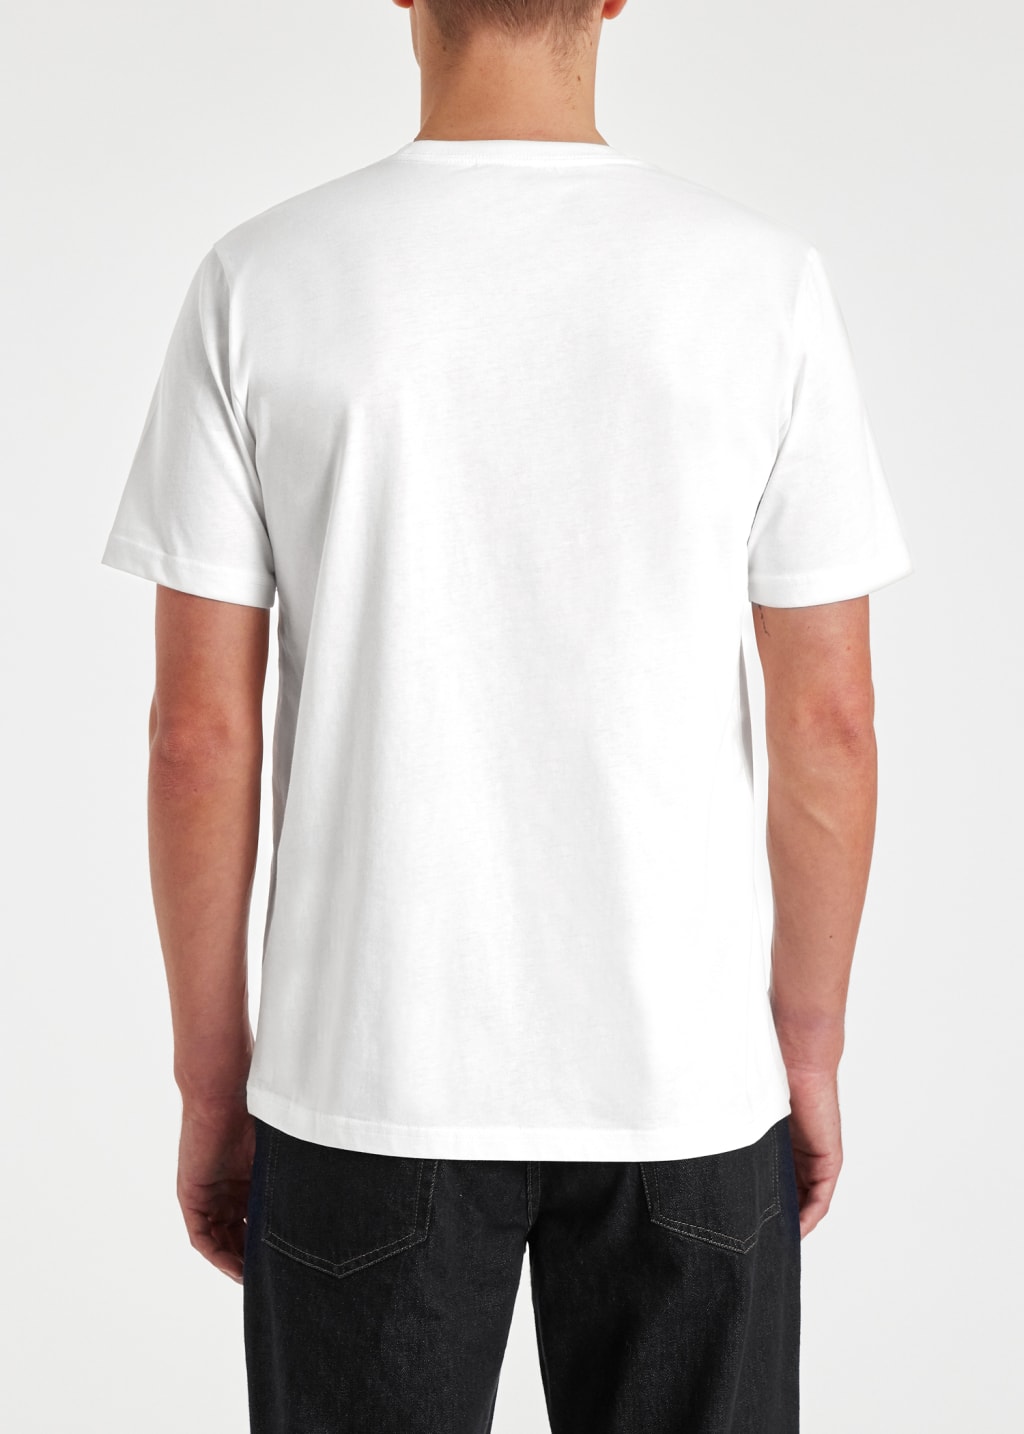 Model View - White 'Cyclist Sketch' Print Cotton T-Shirt Paul Smith